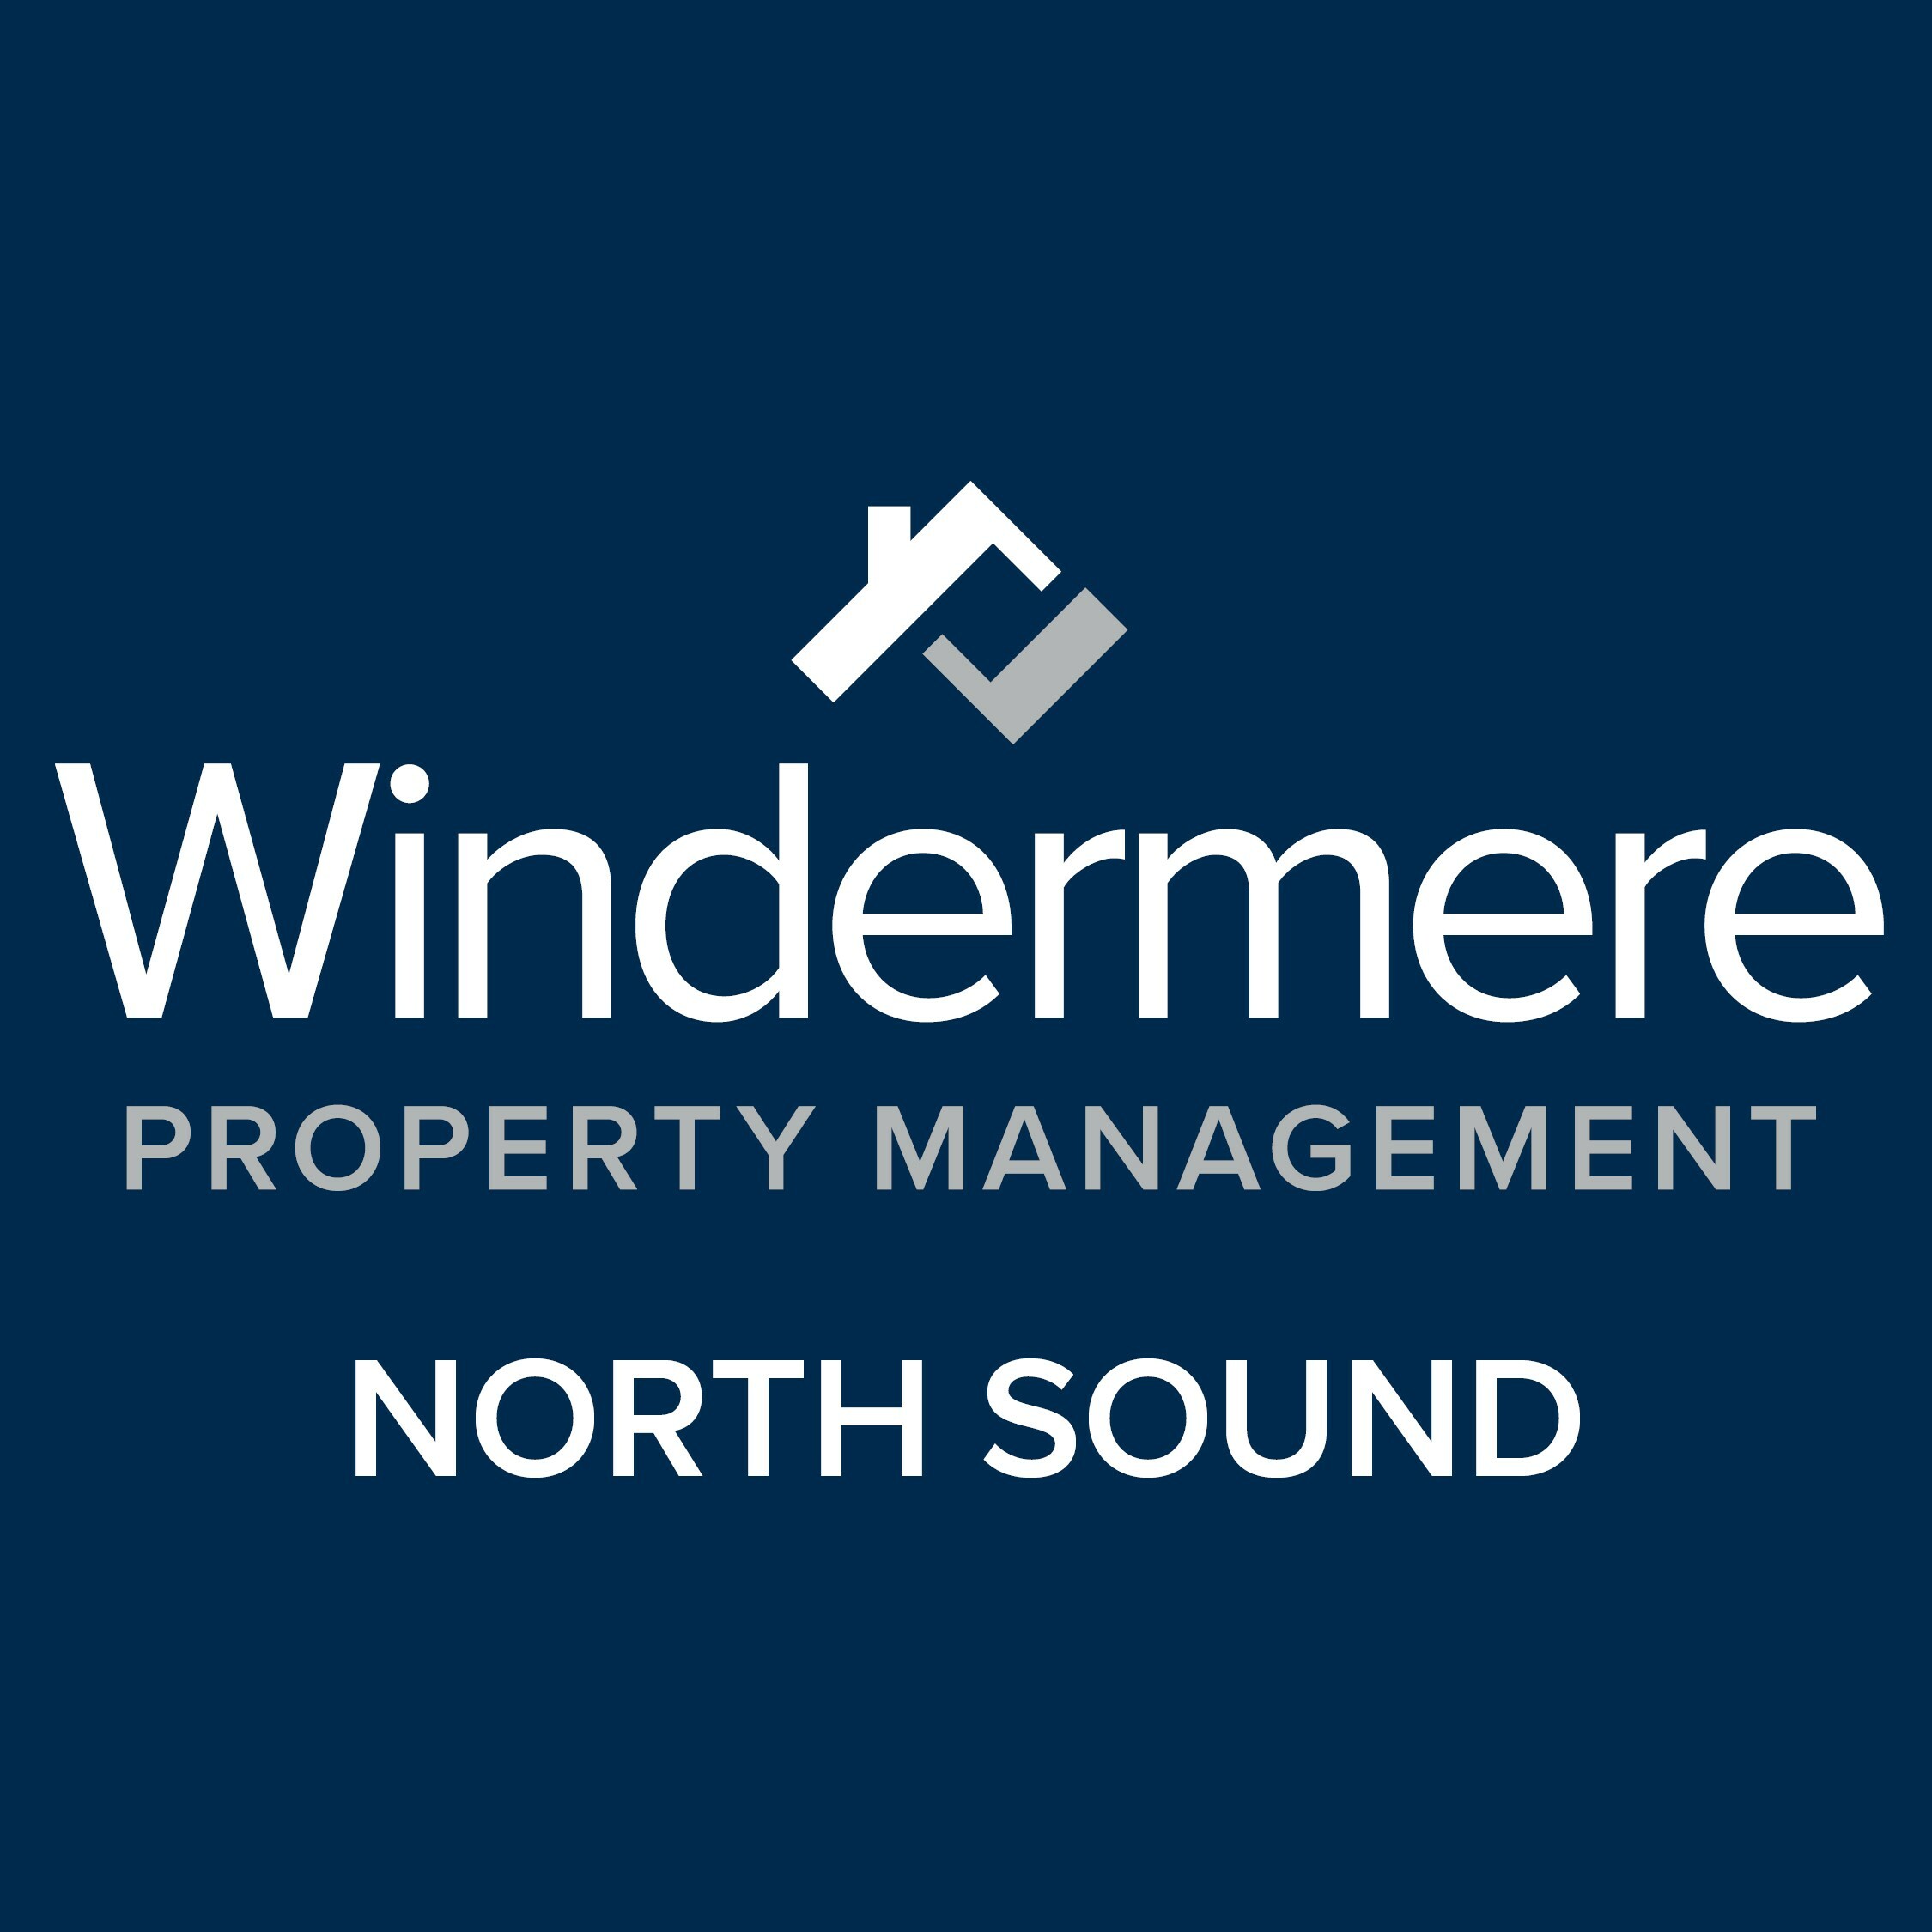 WPM North Sound, Windermere Property Management / North Sound in Anacortes, Windermere